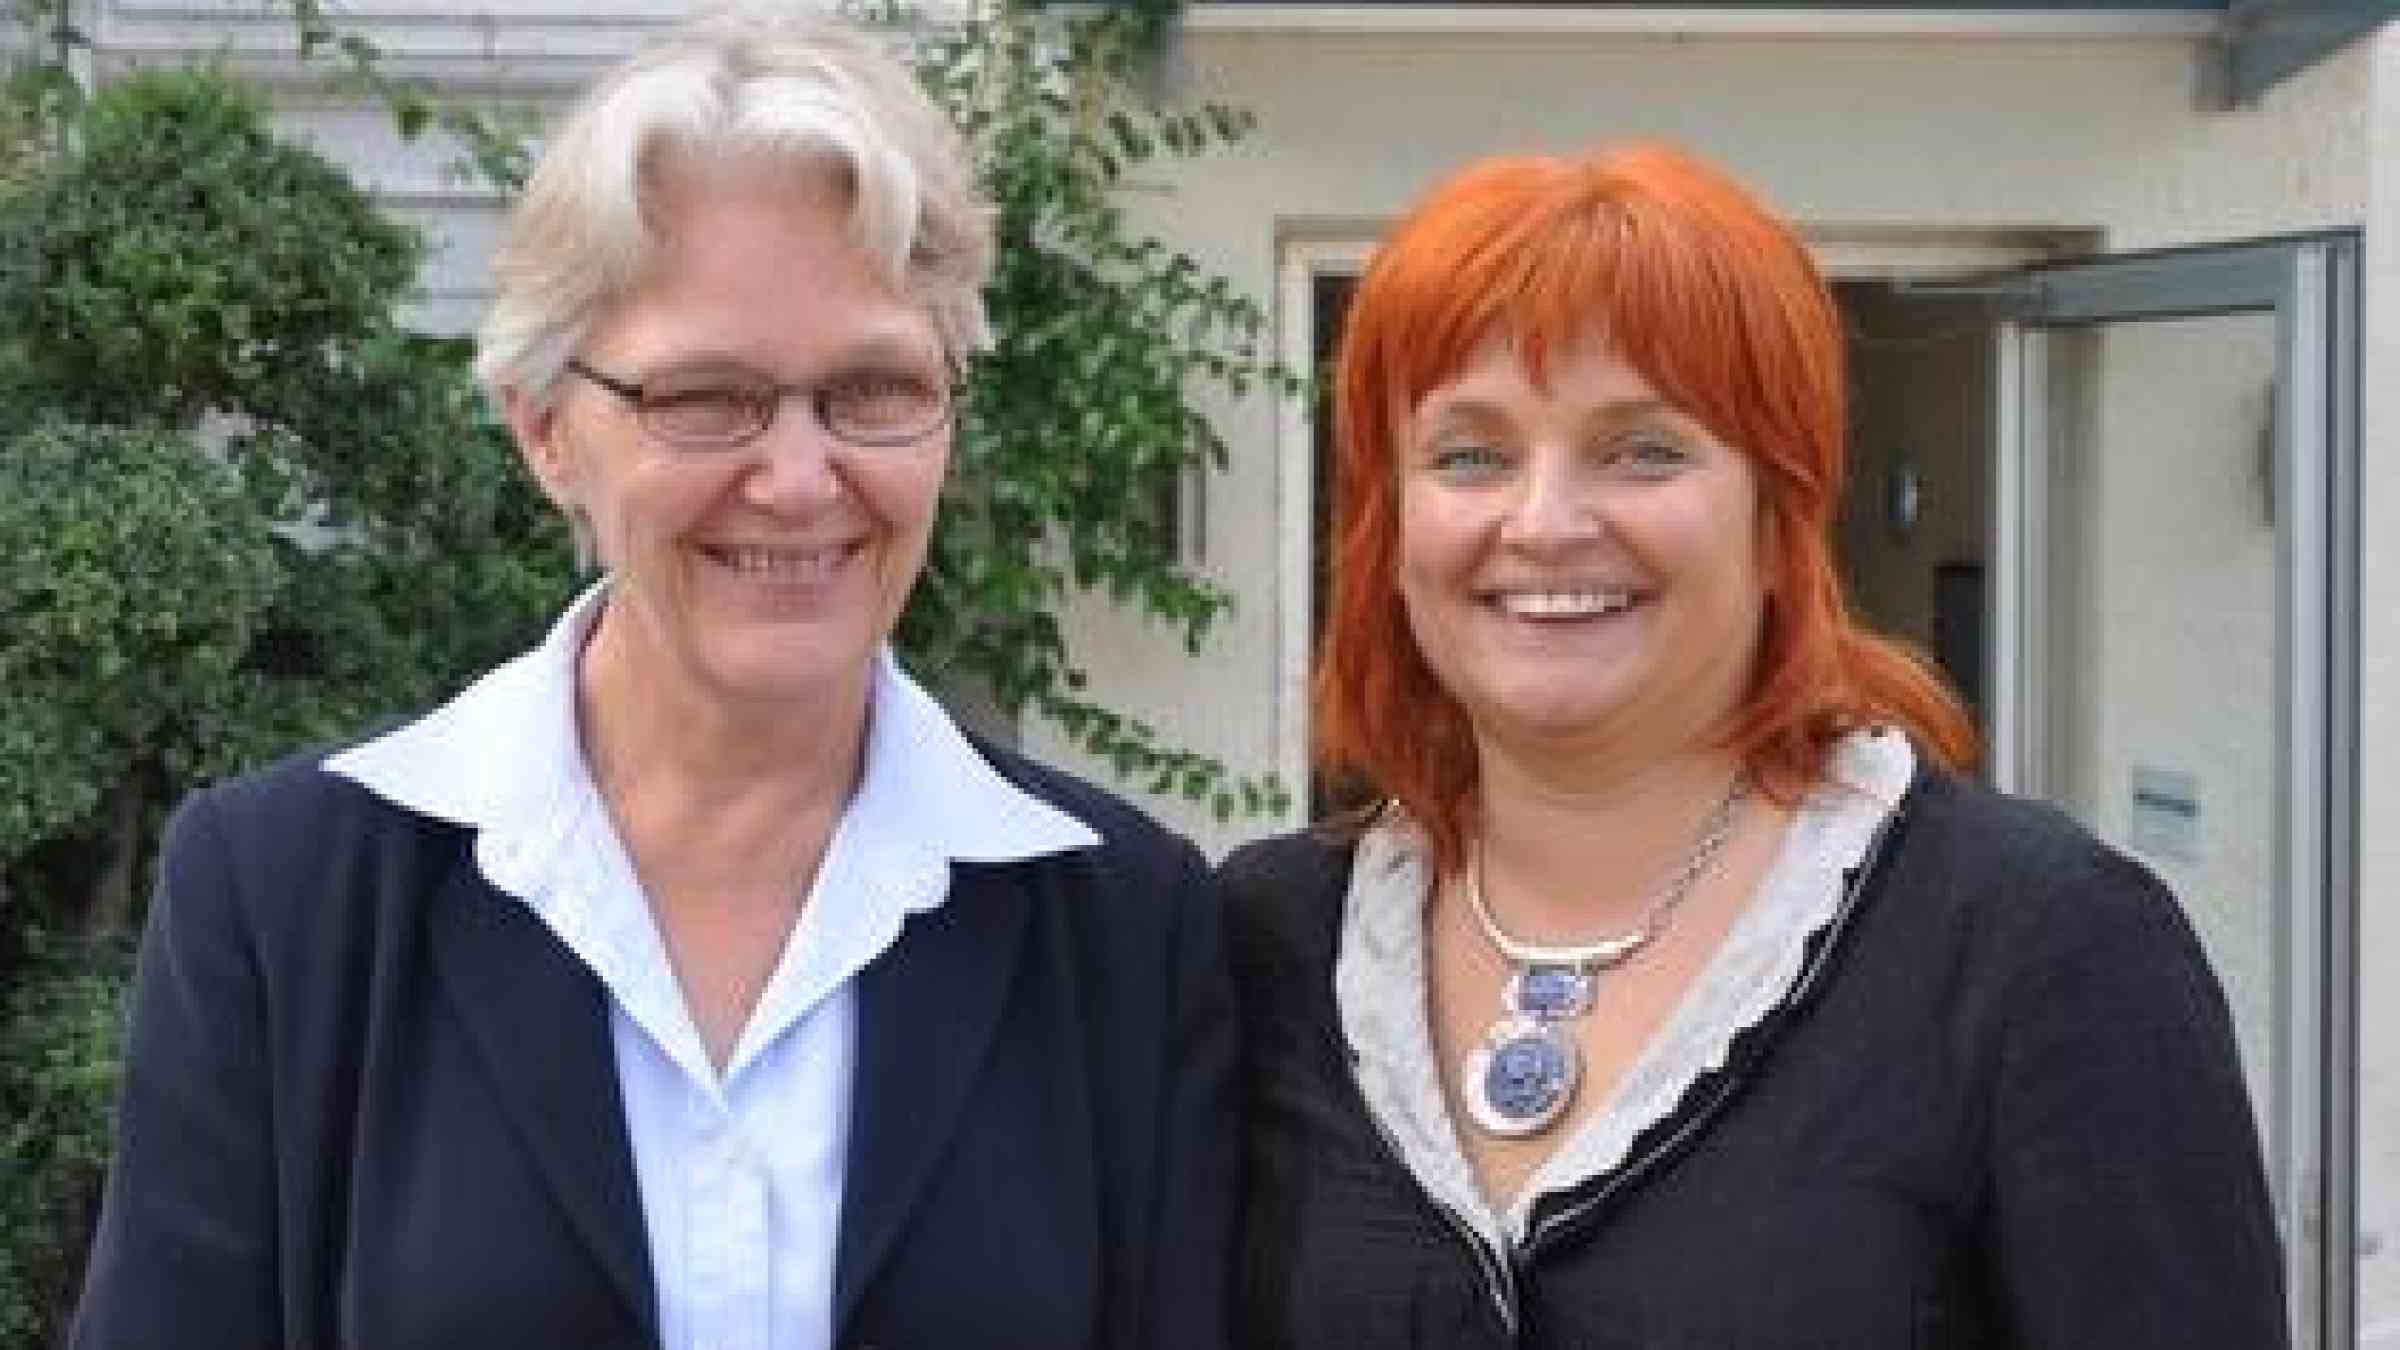 From left: Margareta Wahlström, Special Representative of the UN Secretary-General for Disaster Risk Reduction, and Croatian educator, Sunčana Jokić.